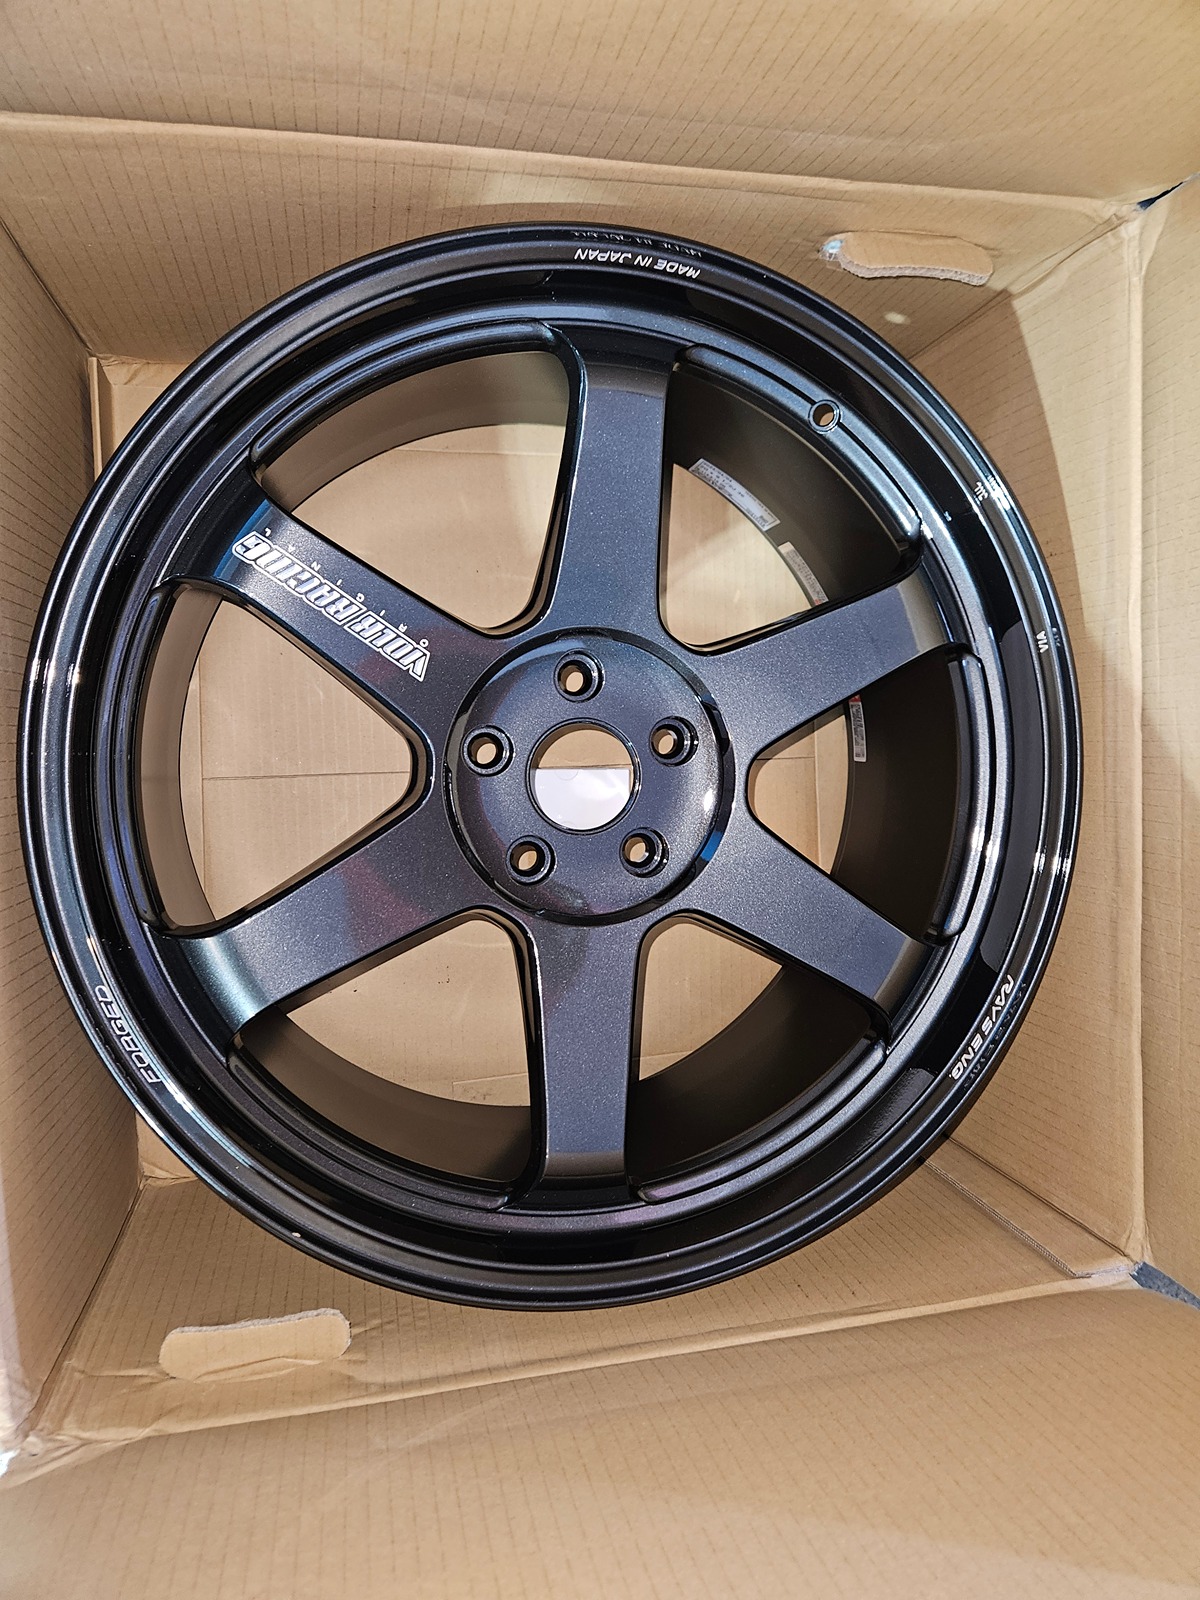 11th Gen Honda Civic Volk Racing TE37 Diamond Black wheels 20x9.5 5x114.3 et 36, set of 4 20240211_074658